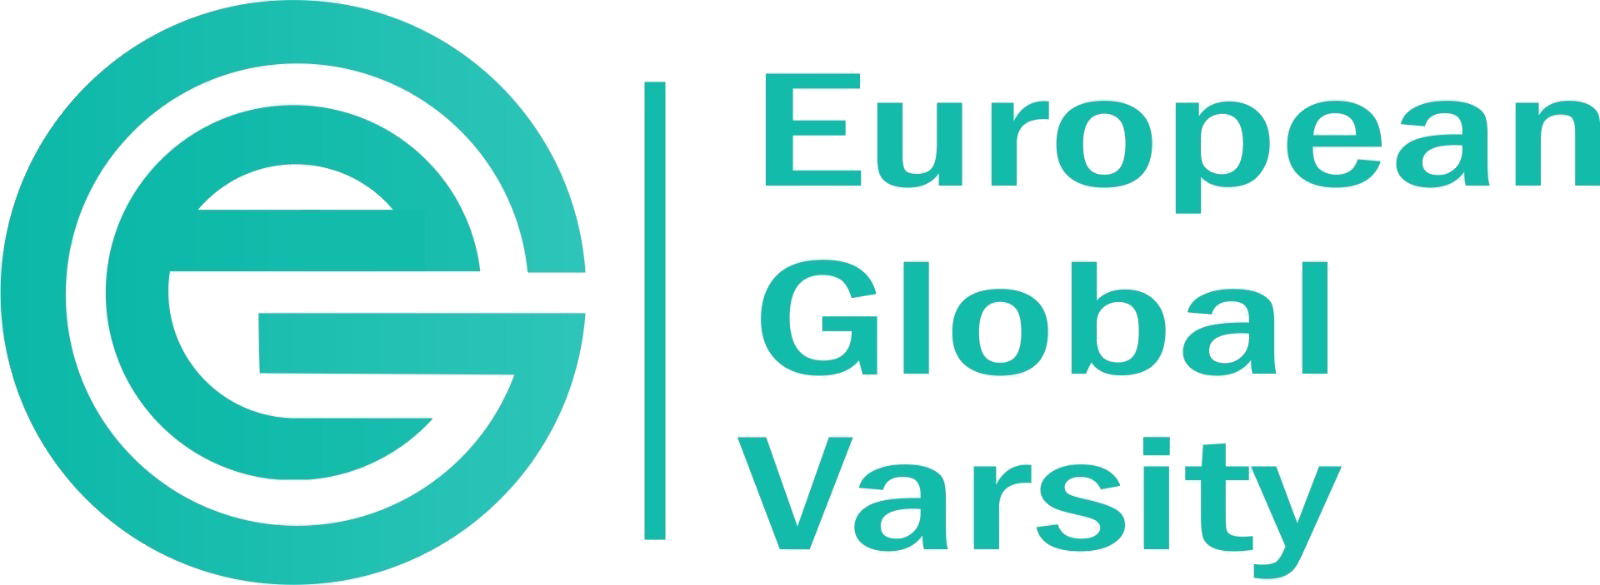 European Global Varsity logo